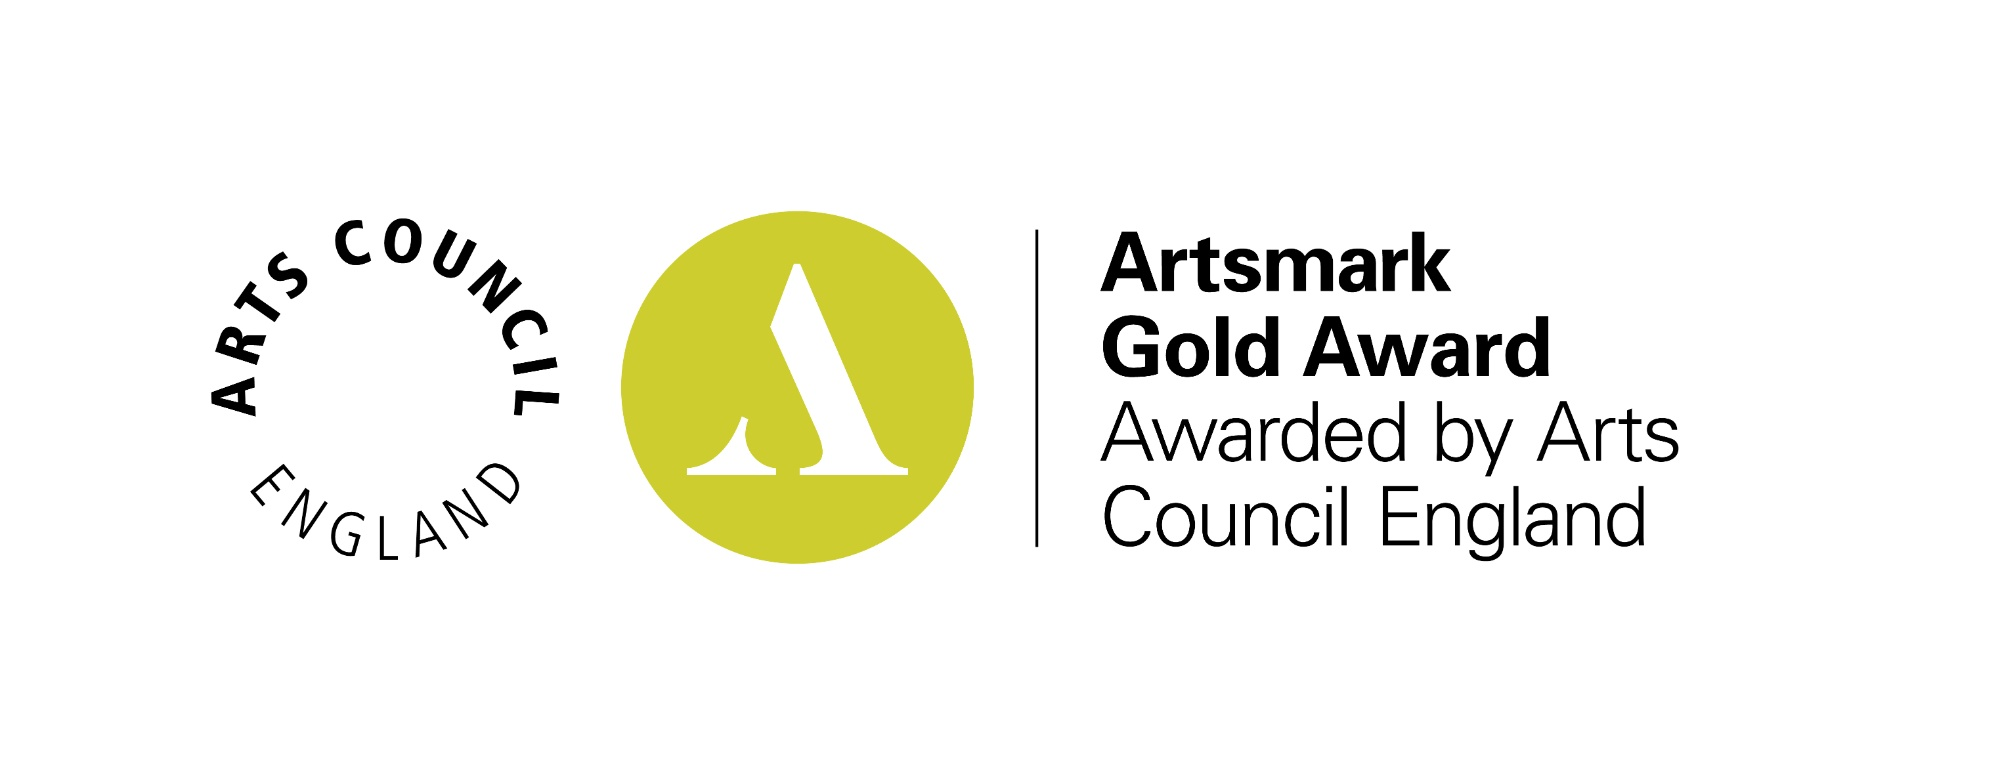 Gold Artsmark Award 